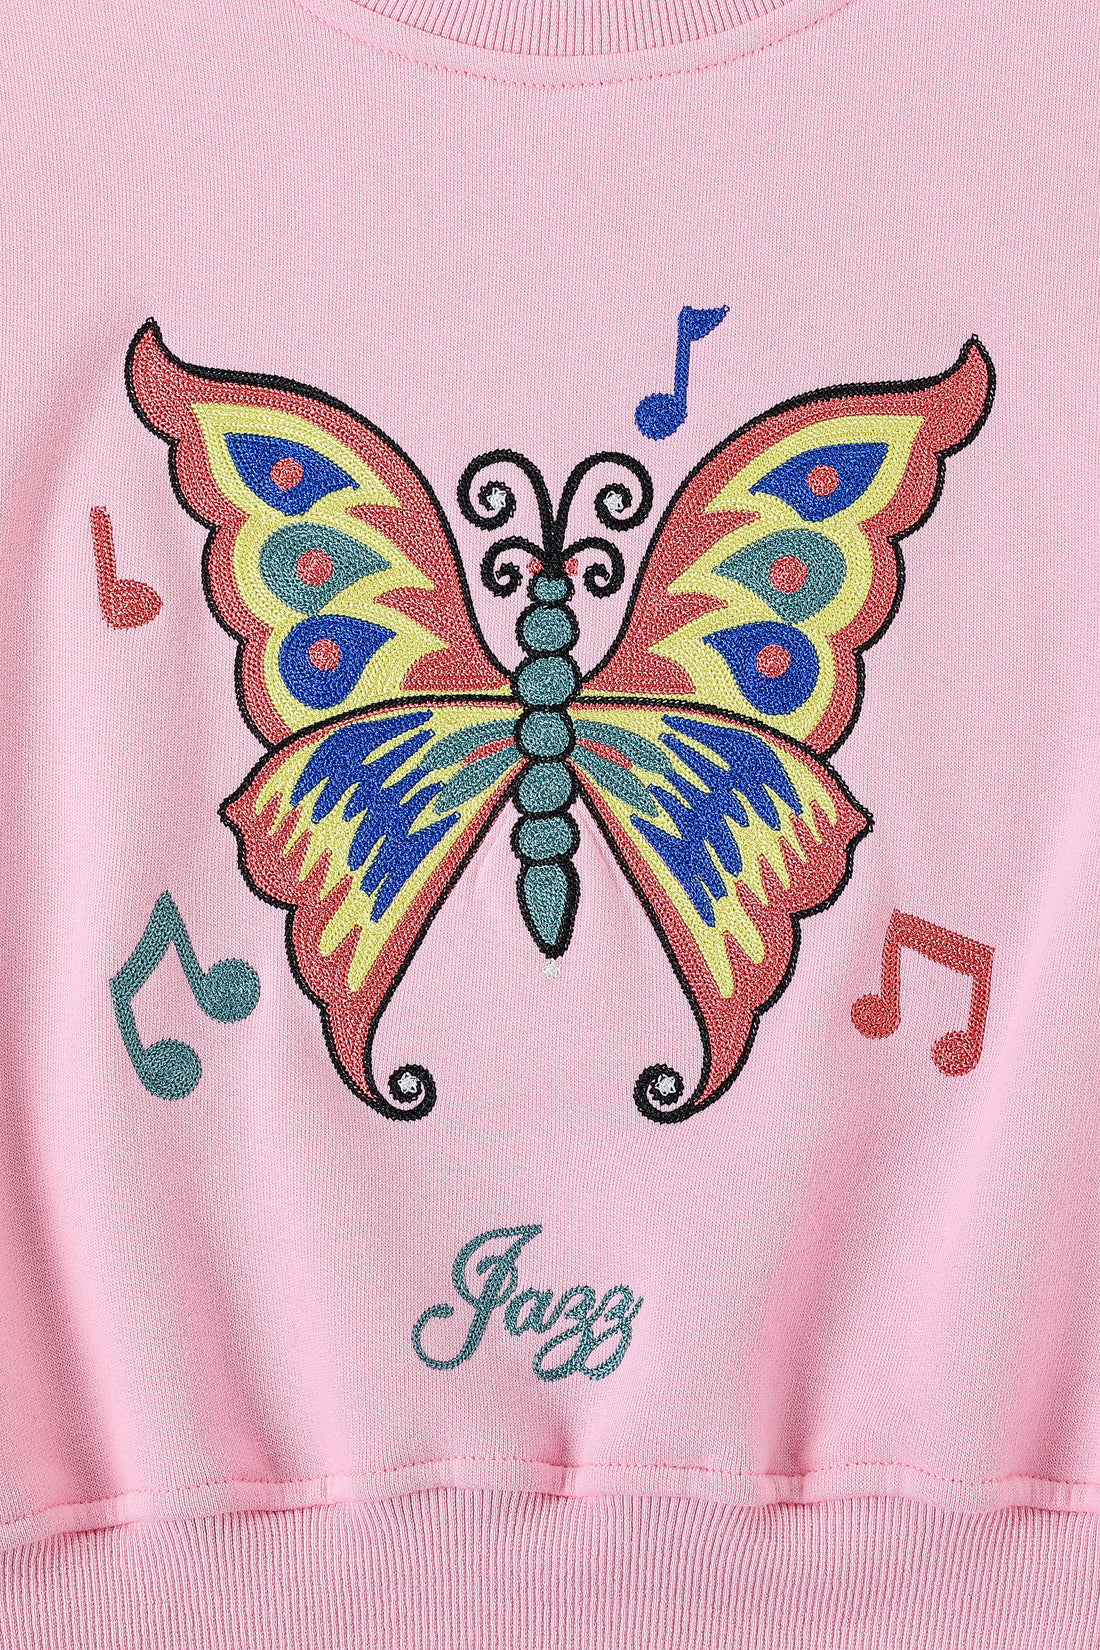 Jazz Butterfly Crewneck Sweatshirt